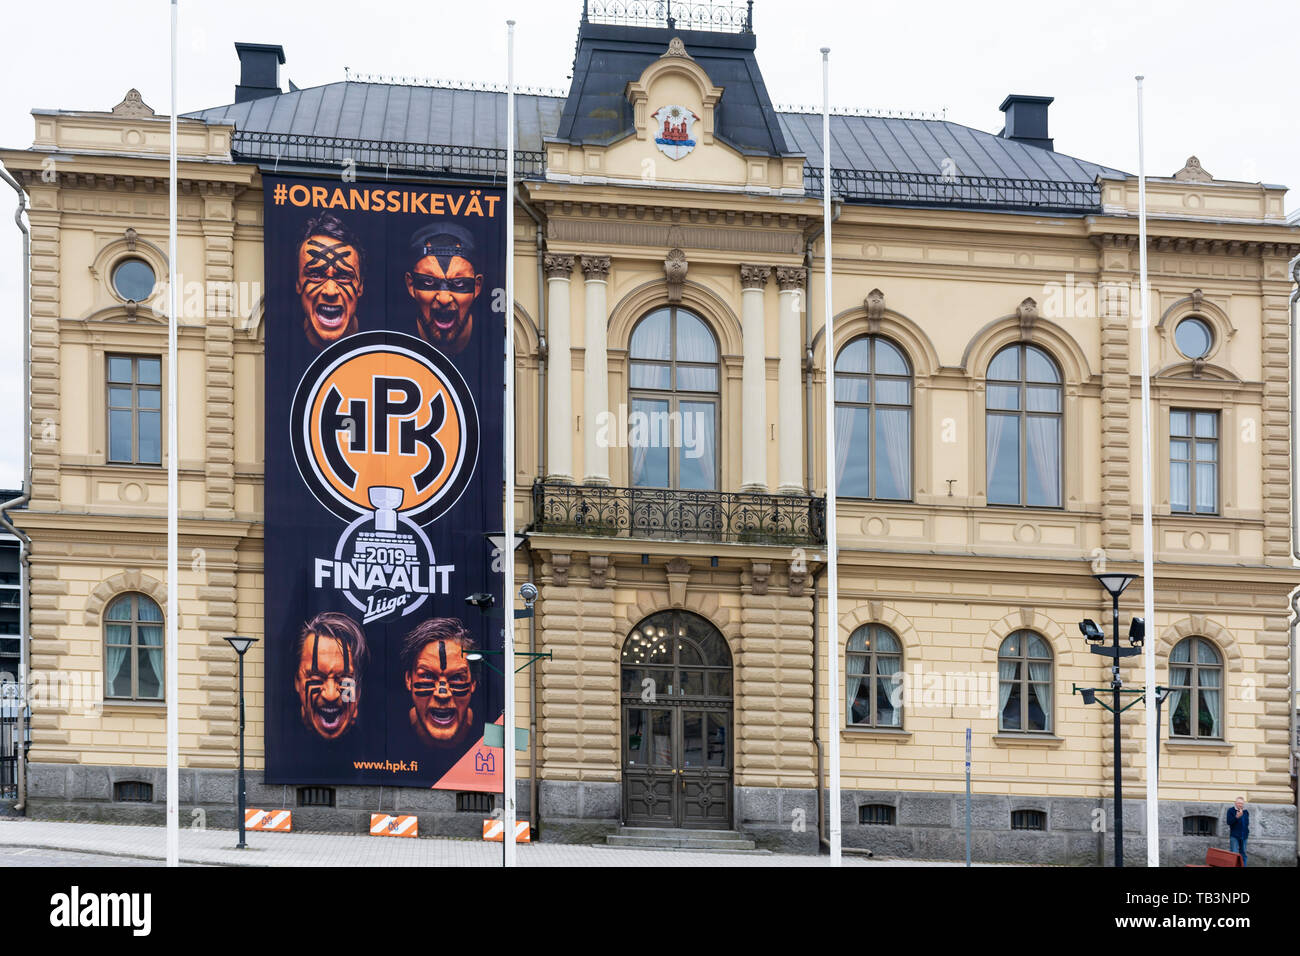 HPK Ice hockey team banner on town hall wall in Hämeenlinna Finland Stock Photo